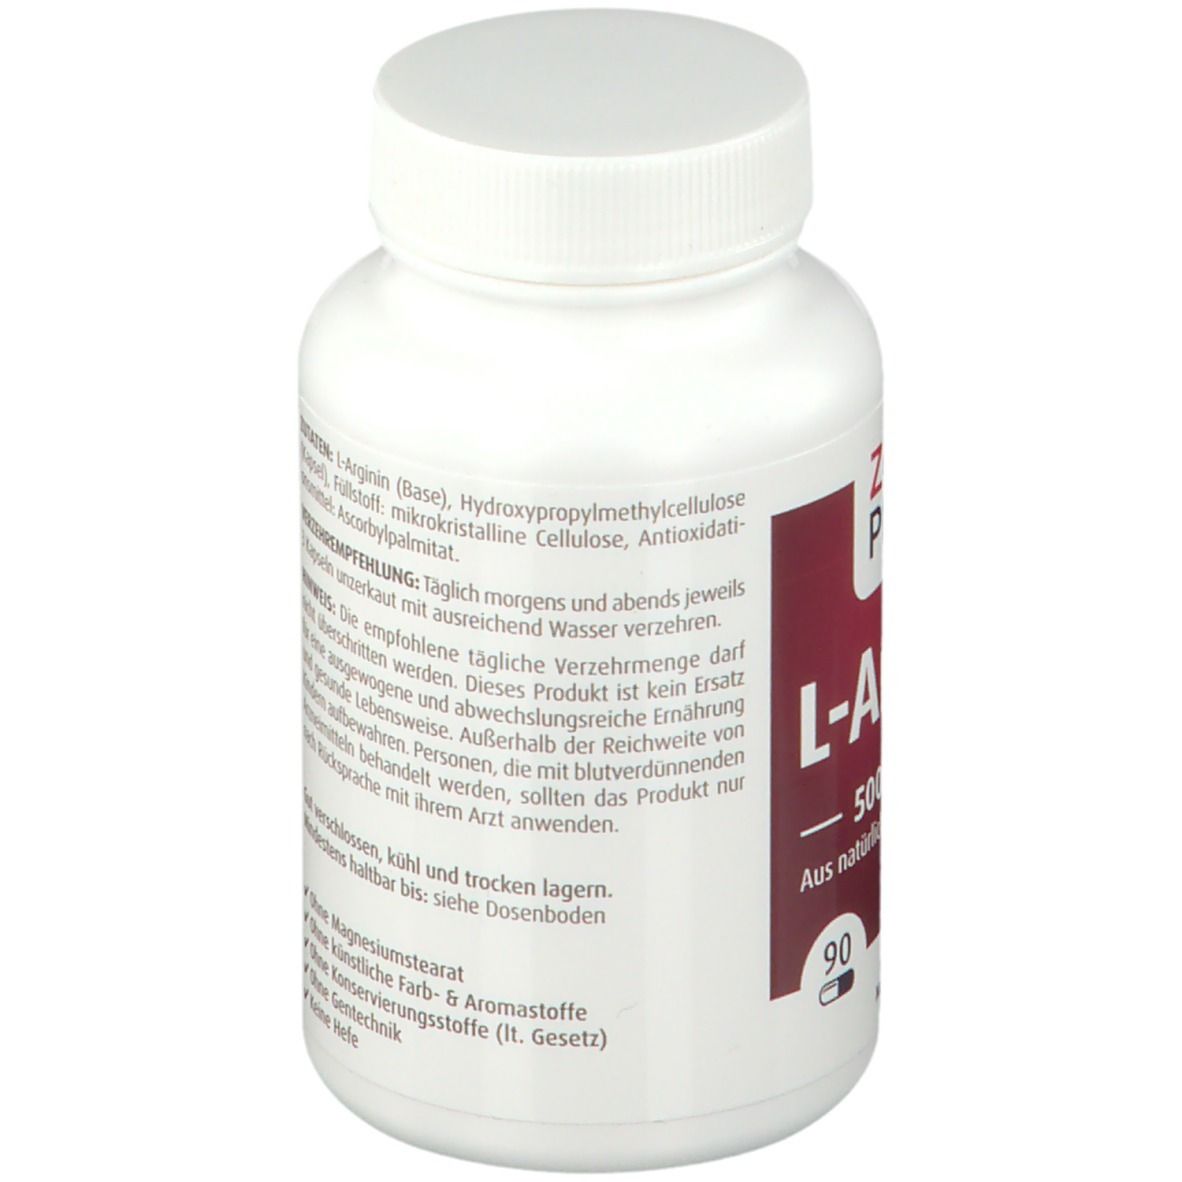 ZeinPharma® L Arginin Kapseln 500 mg